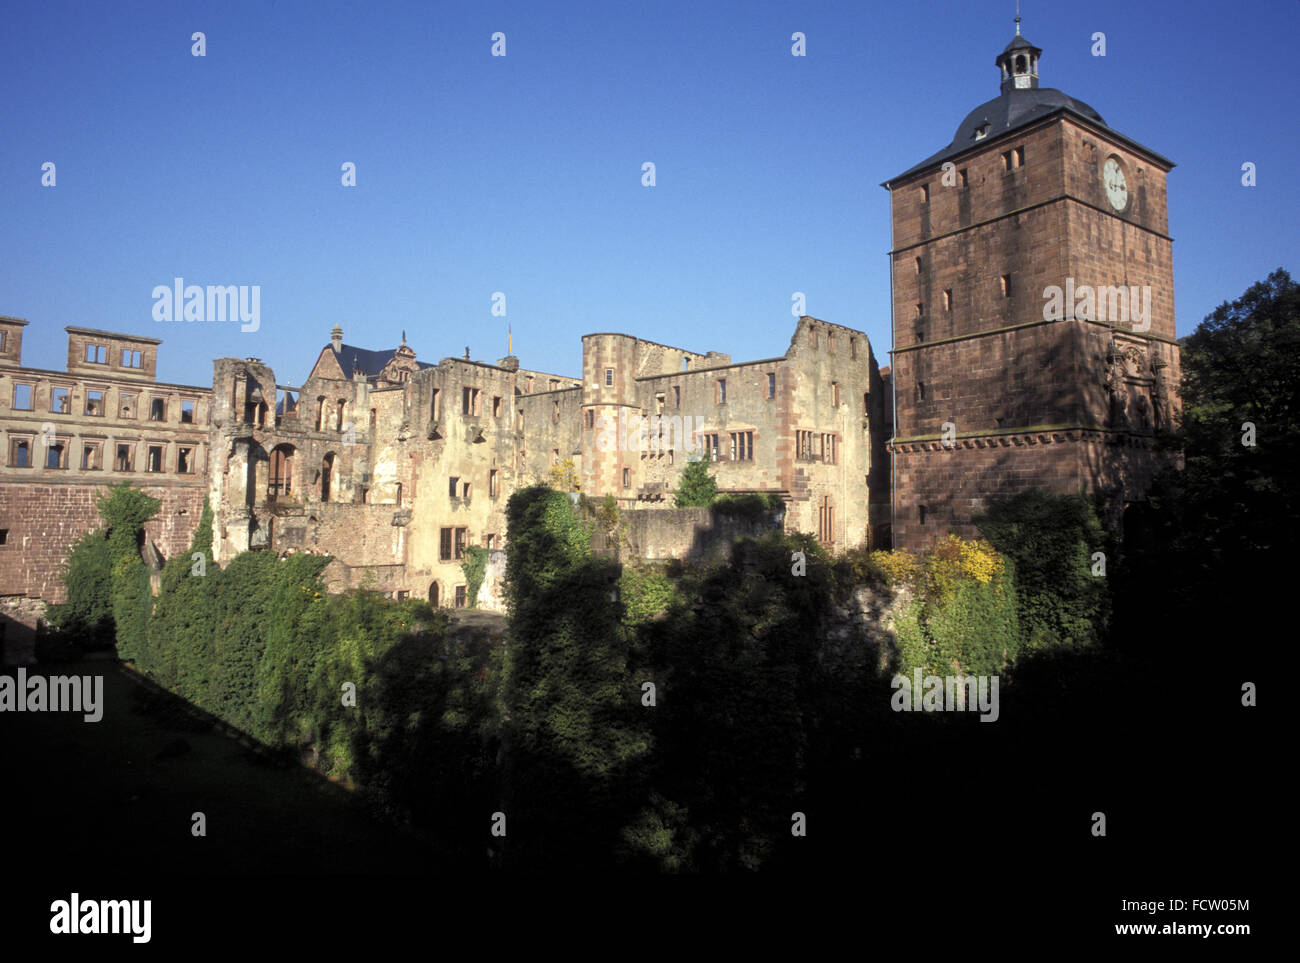 DEU, Allemagne, Heidelberg, le château. DEU, Deutschland, Heidelberg, Das Schloss. Banque D'Images